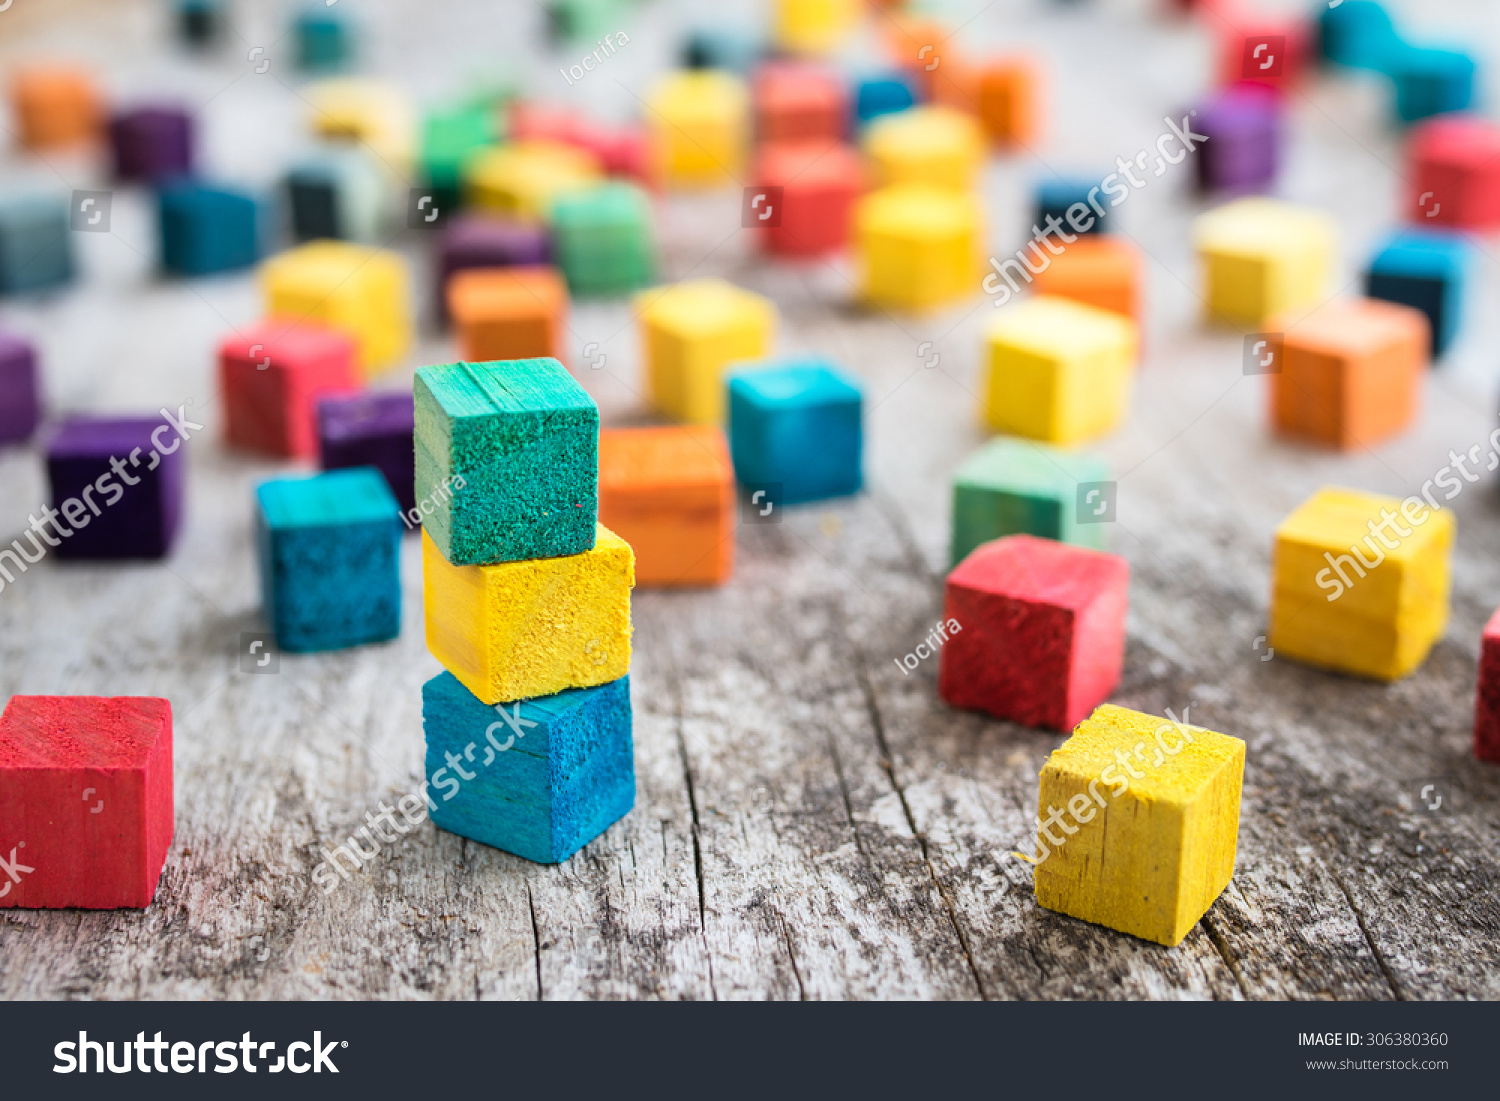 Colorful wooden building blocks. Selective focus #306380360